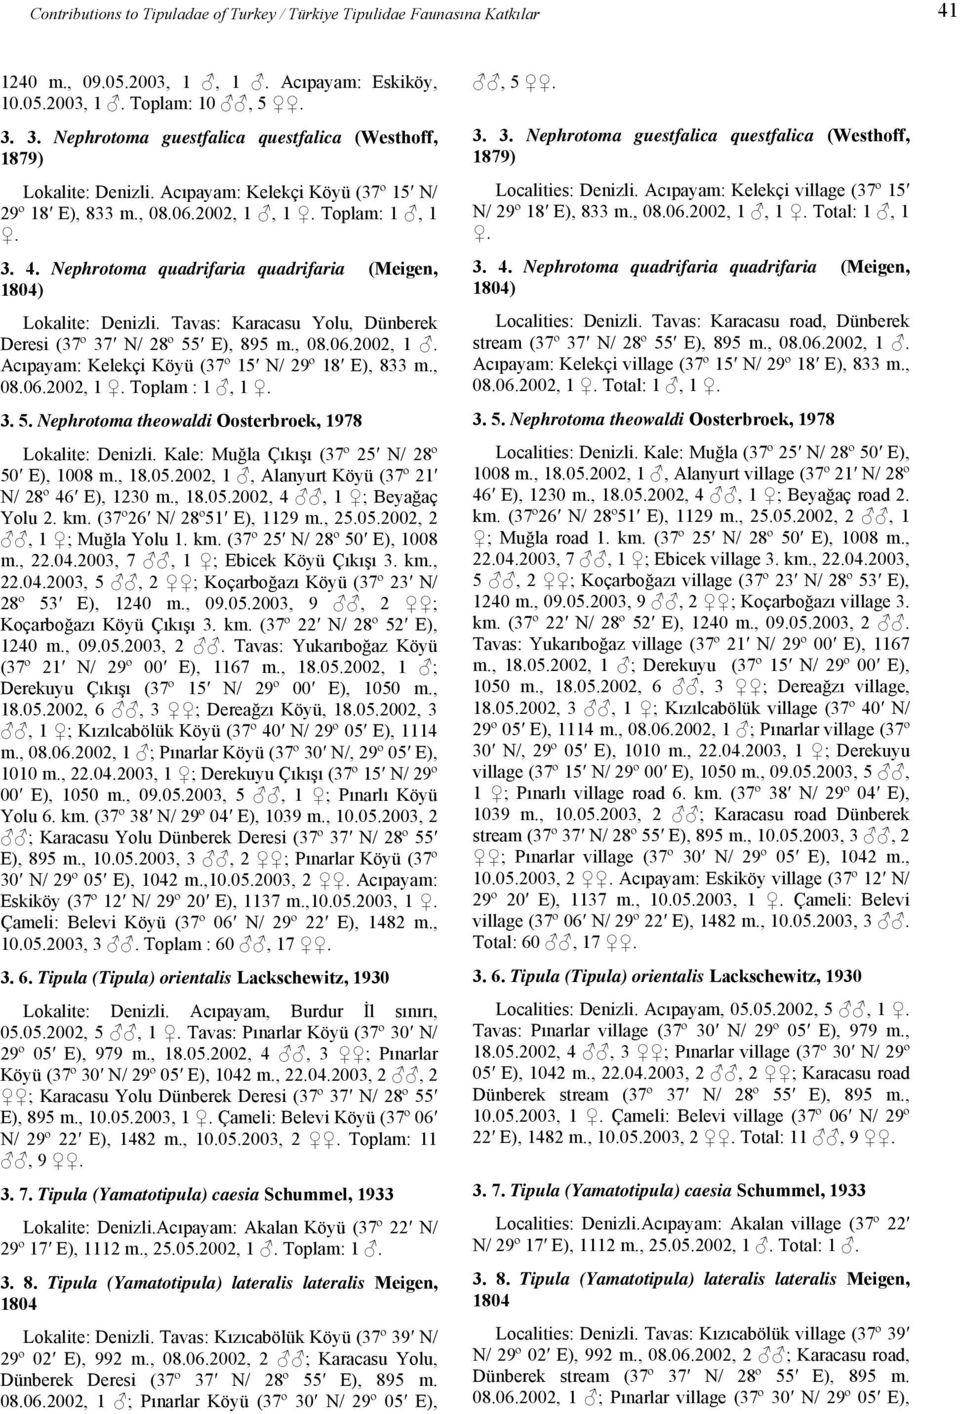 Nephrotoma quadrifaria quadrifaria (Meigen, 1804) Lokalite: Denizli. Tavas: Karacasu Yolu, Dünberek Deresi (37º 37 N/ 28º 55 E), 895 m., 08.06.2002, 1.